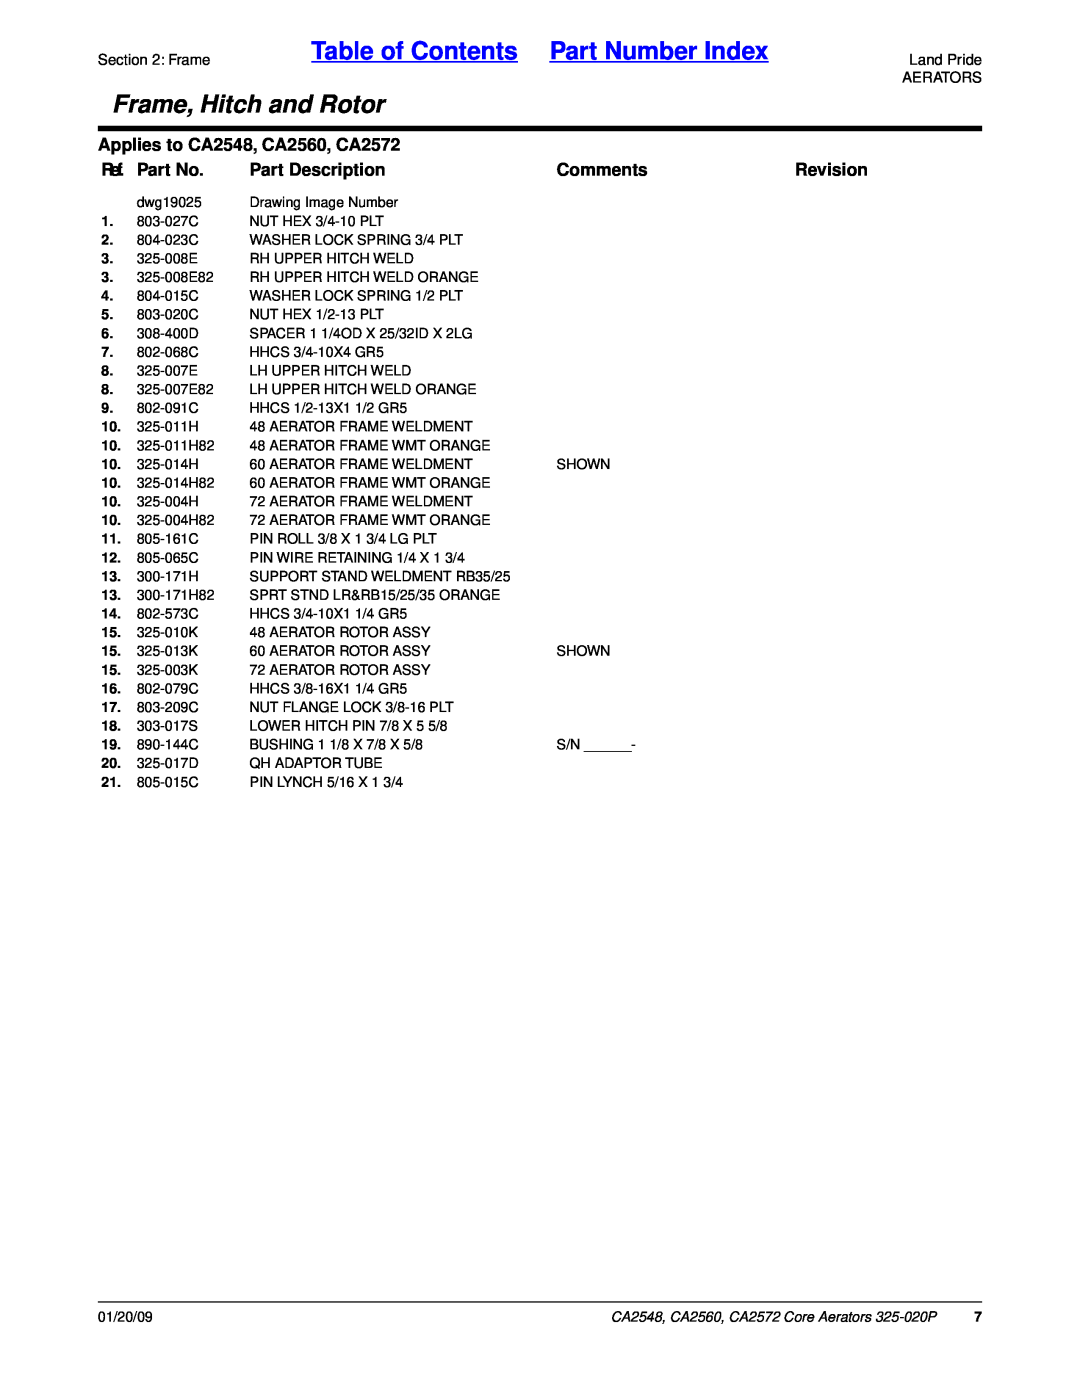 Land Pride CA2560, CA2572, CA2548 Ref. Part No, Part Description, Comments, Revision, Table of Contents Part Number Index 